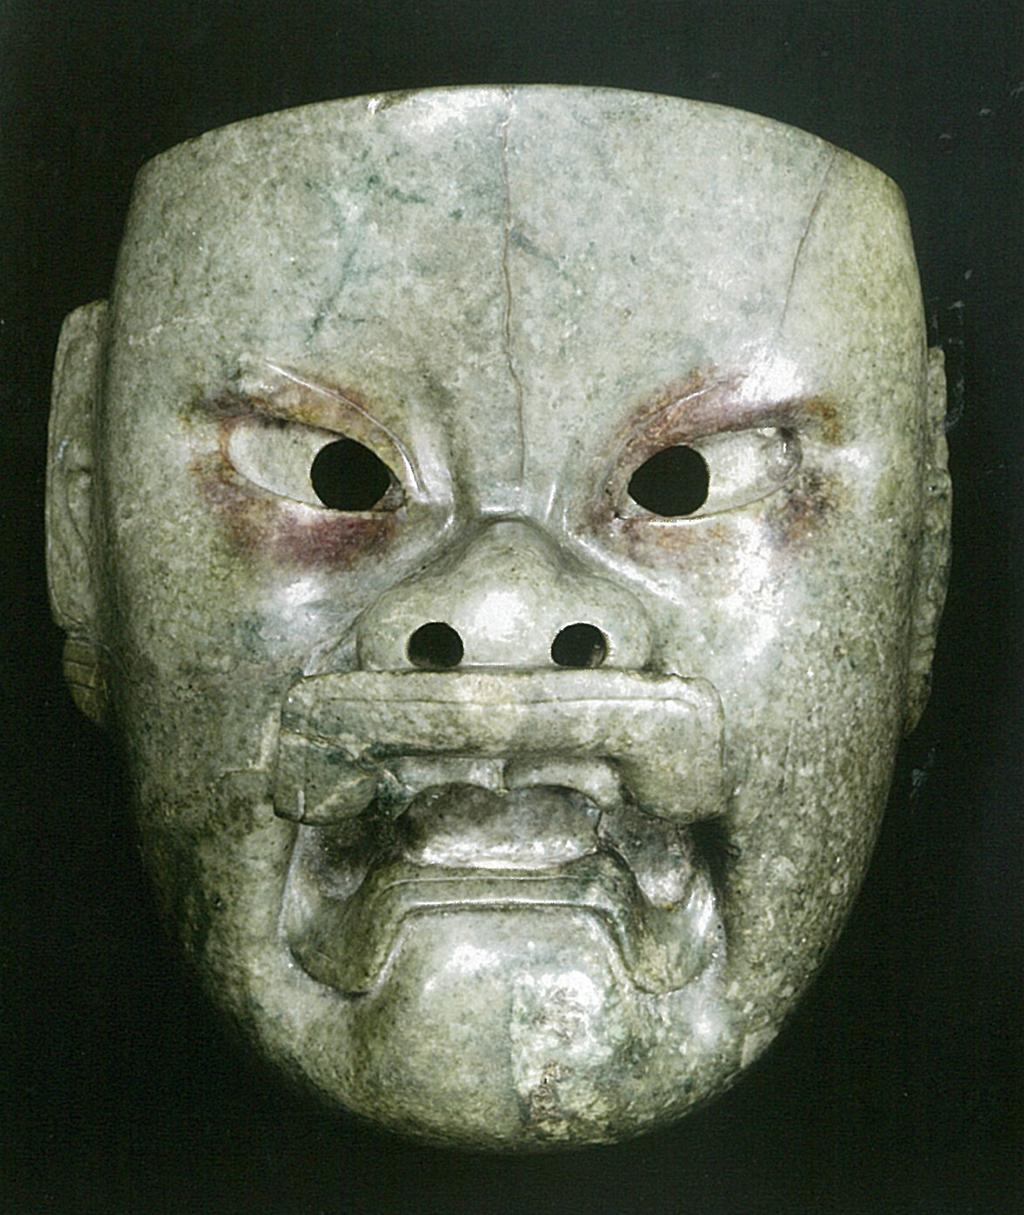 (/art/exhibitions/golden_kingdoms/images/explore/6_ex.2017.2.352_x1024.jpg) Mask, 900 400 BC, Olmec culture; jadeite. Pre-Columbian Collection, Dumbarton Oaks, Washington, D.C., PC.B.020.